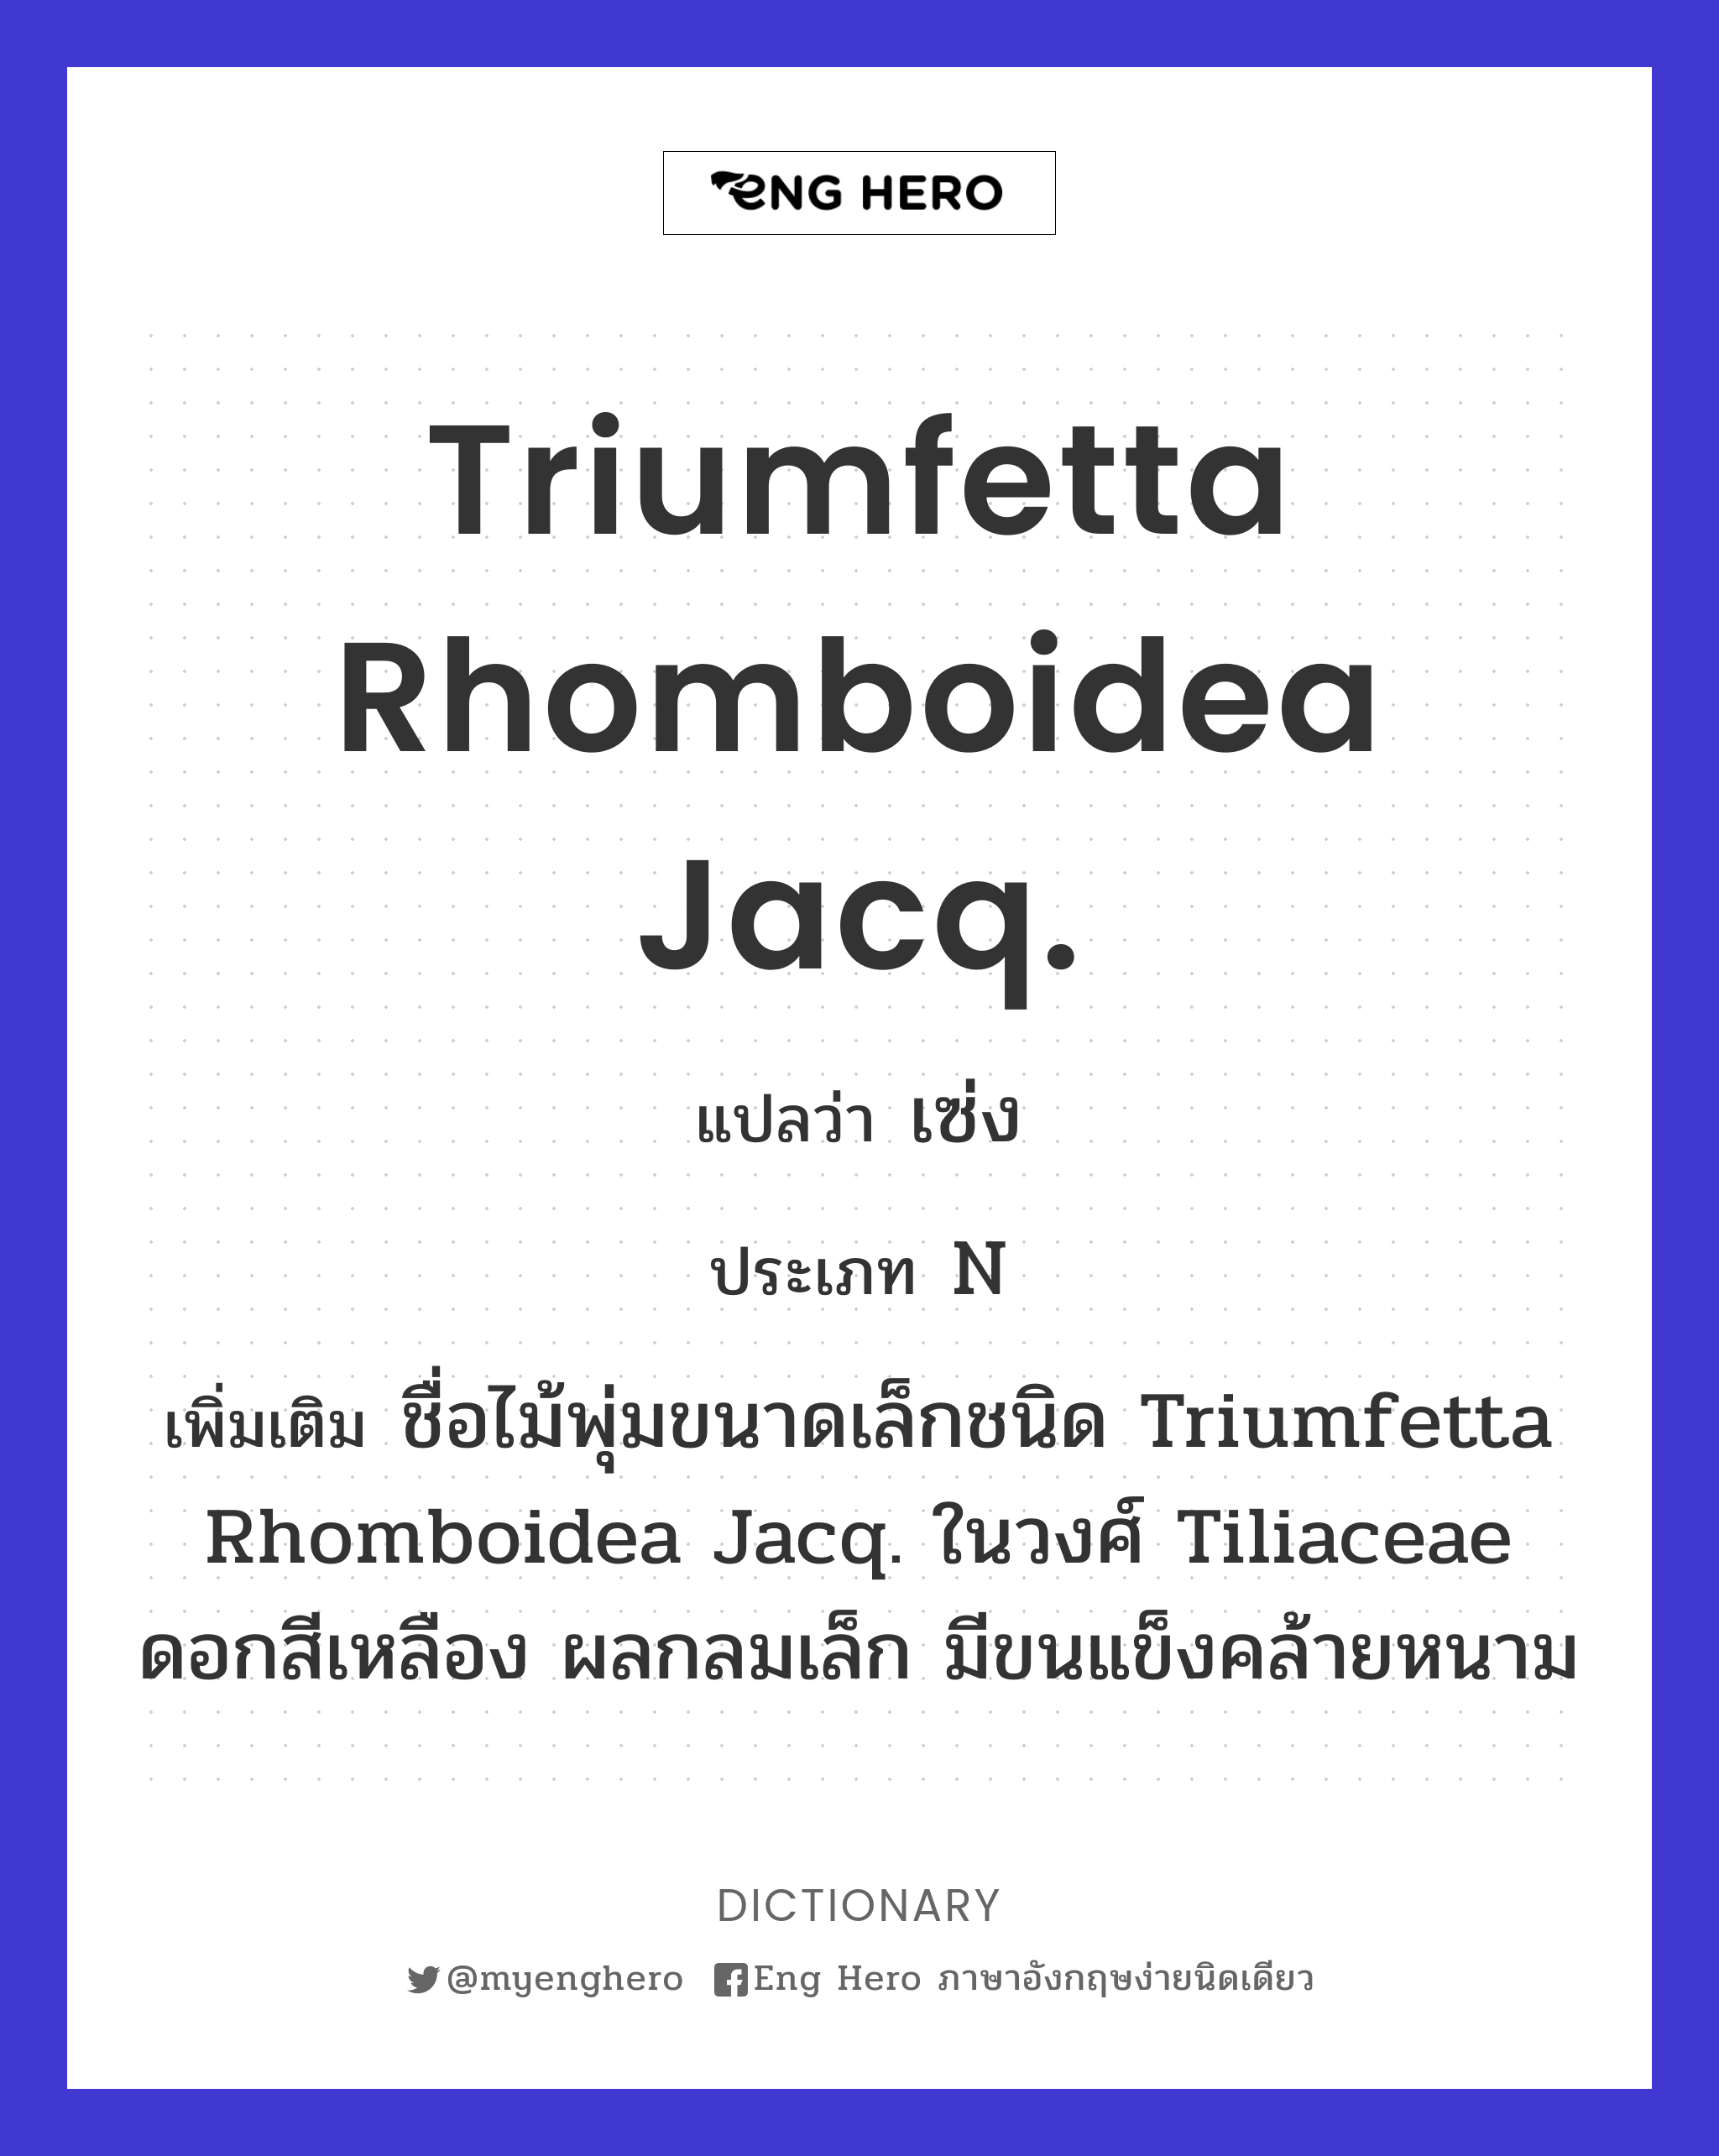 Triumfetta rhomboidea Jacq.